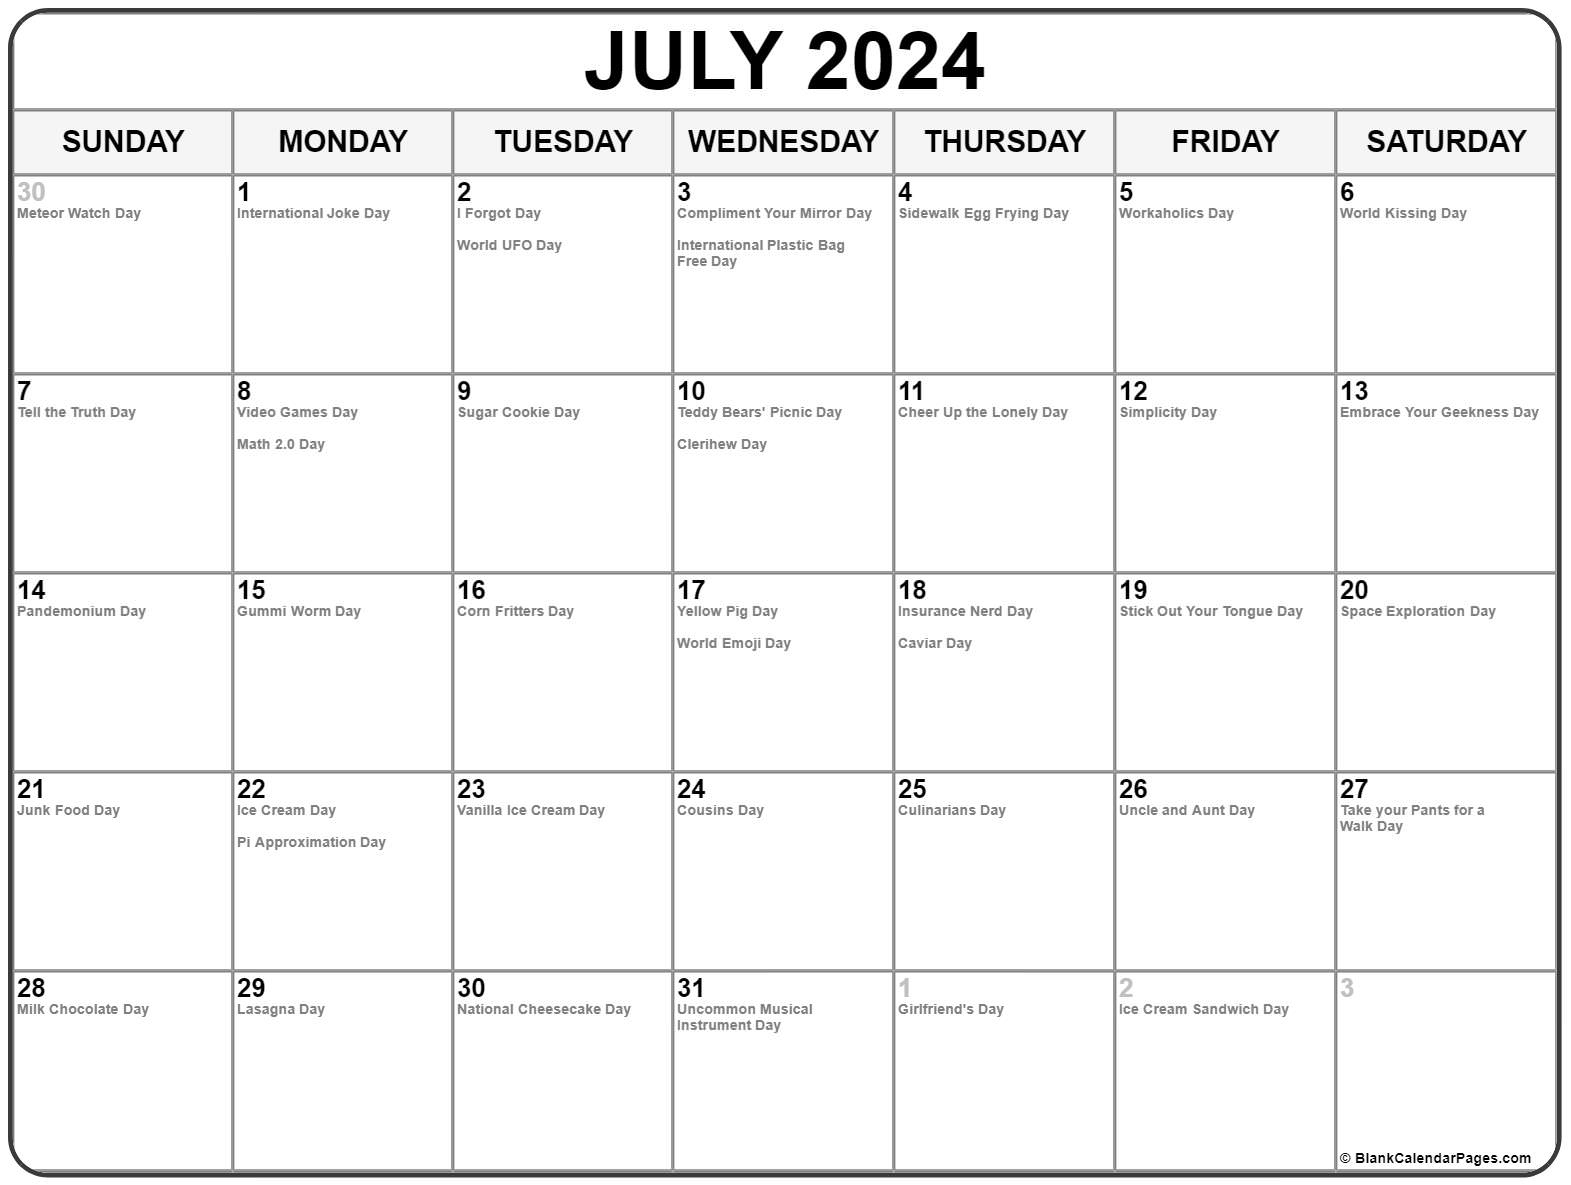 July 2024 With Holidays Calendar | National Holiday Calendar July 2024